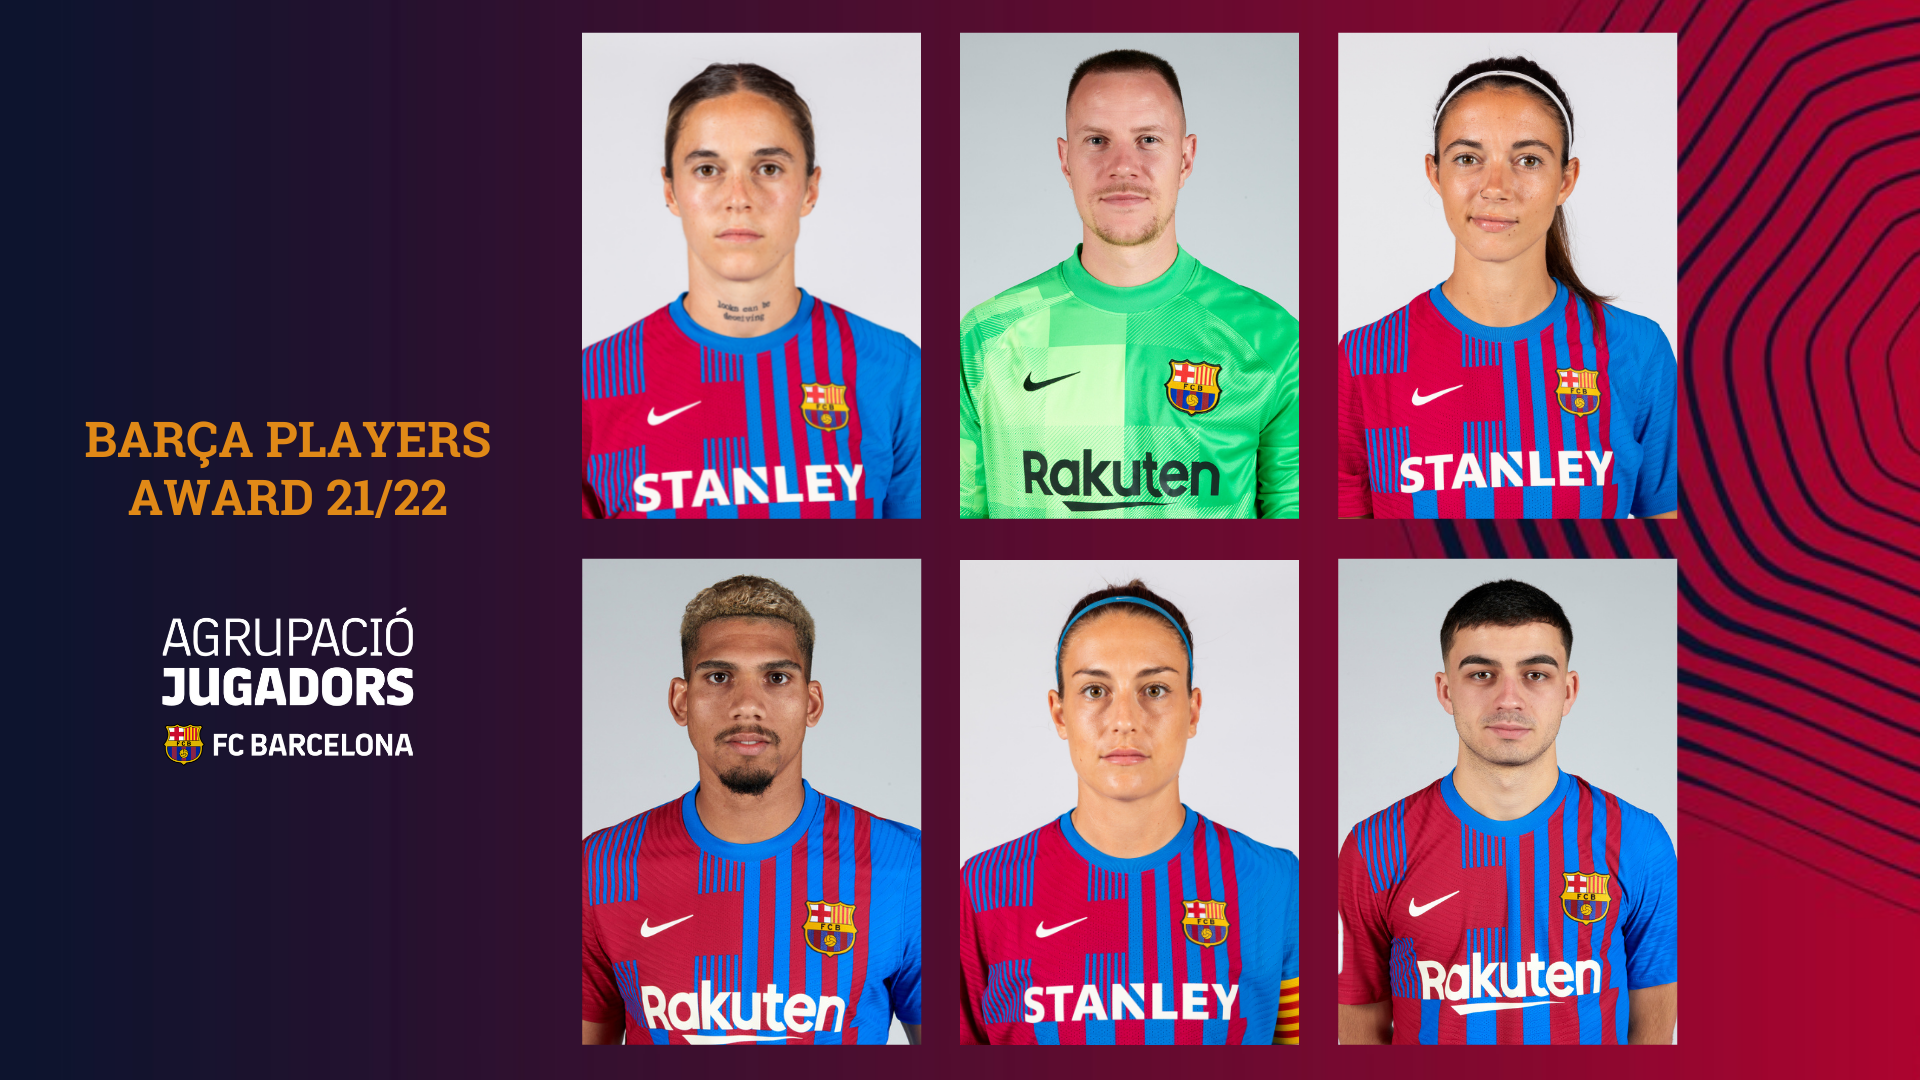 Barça Players Award has their finalists